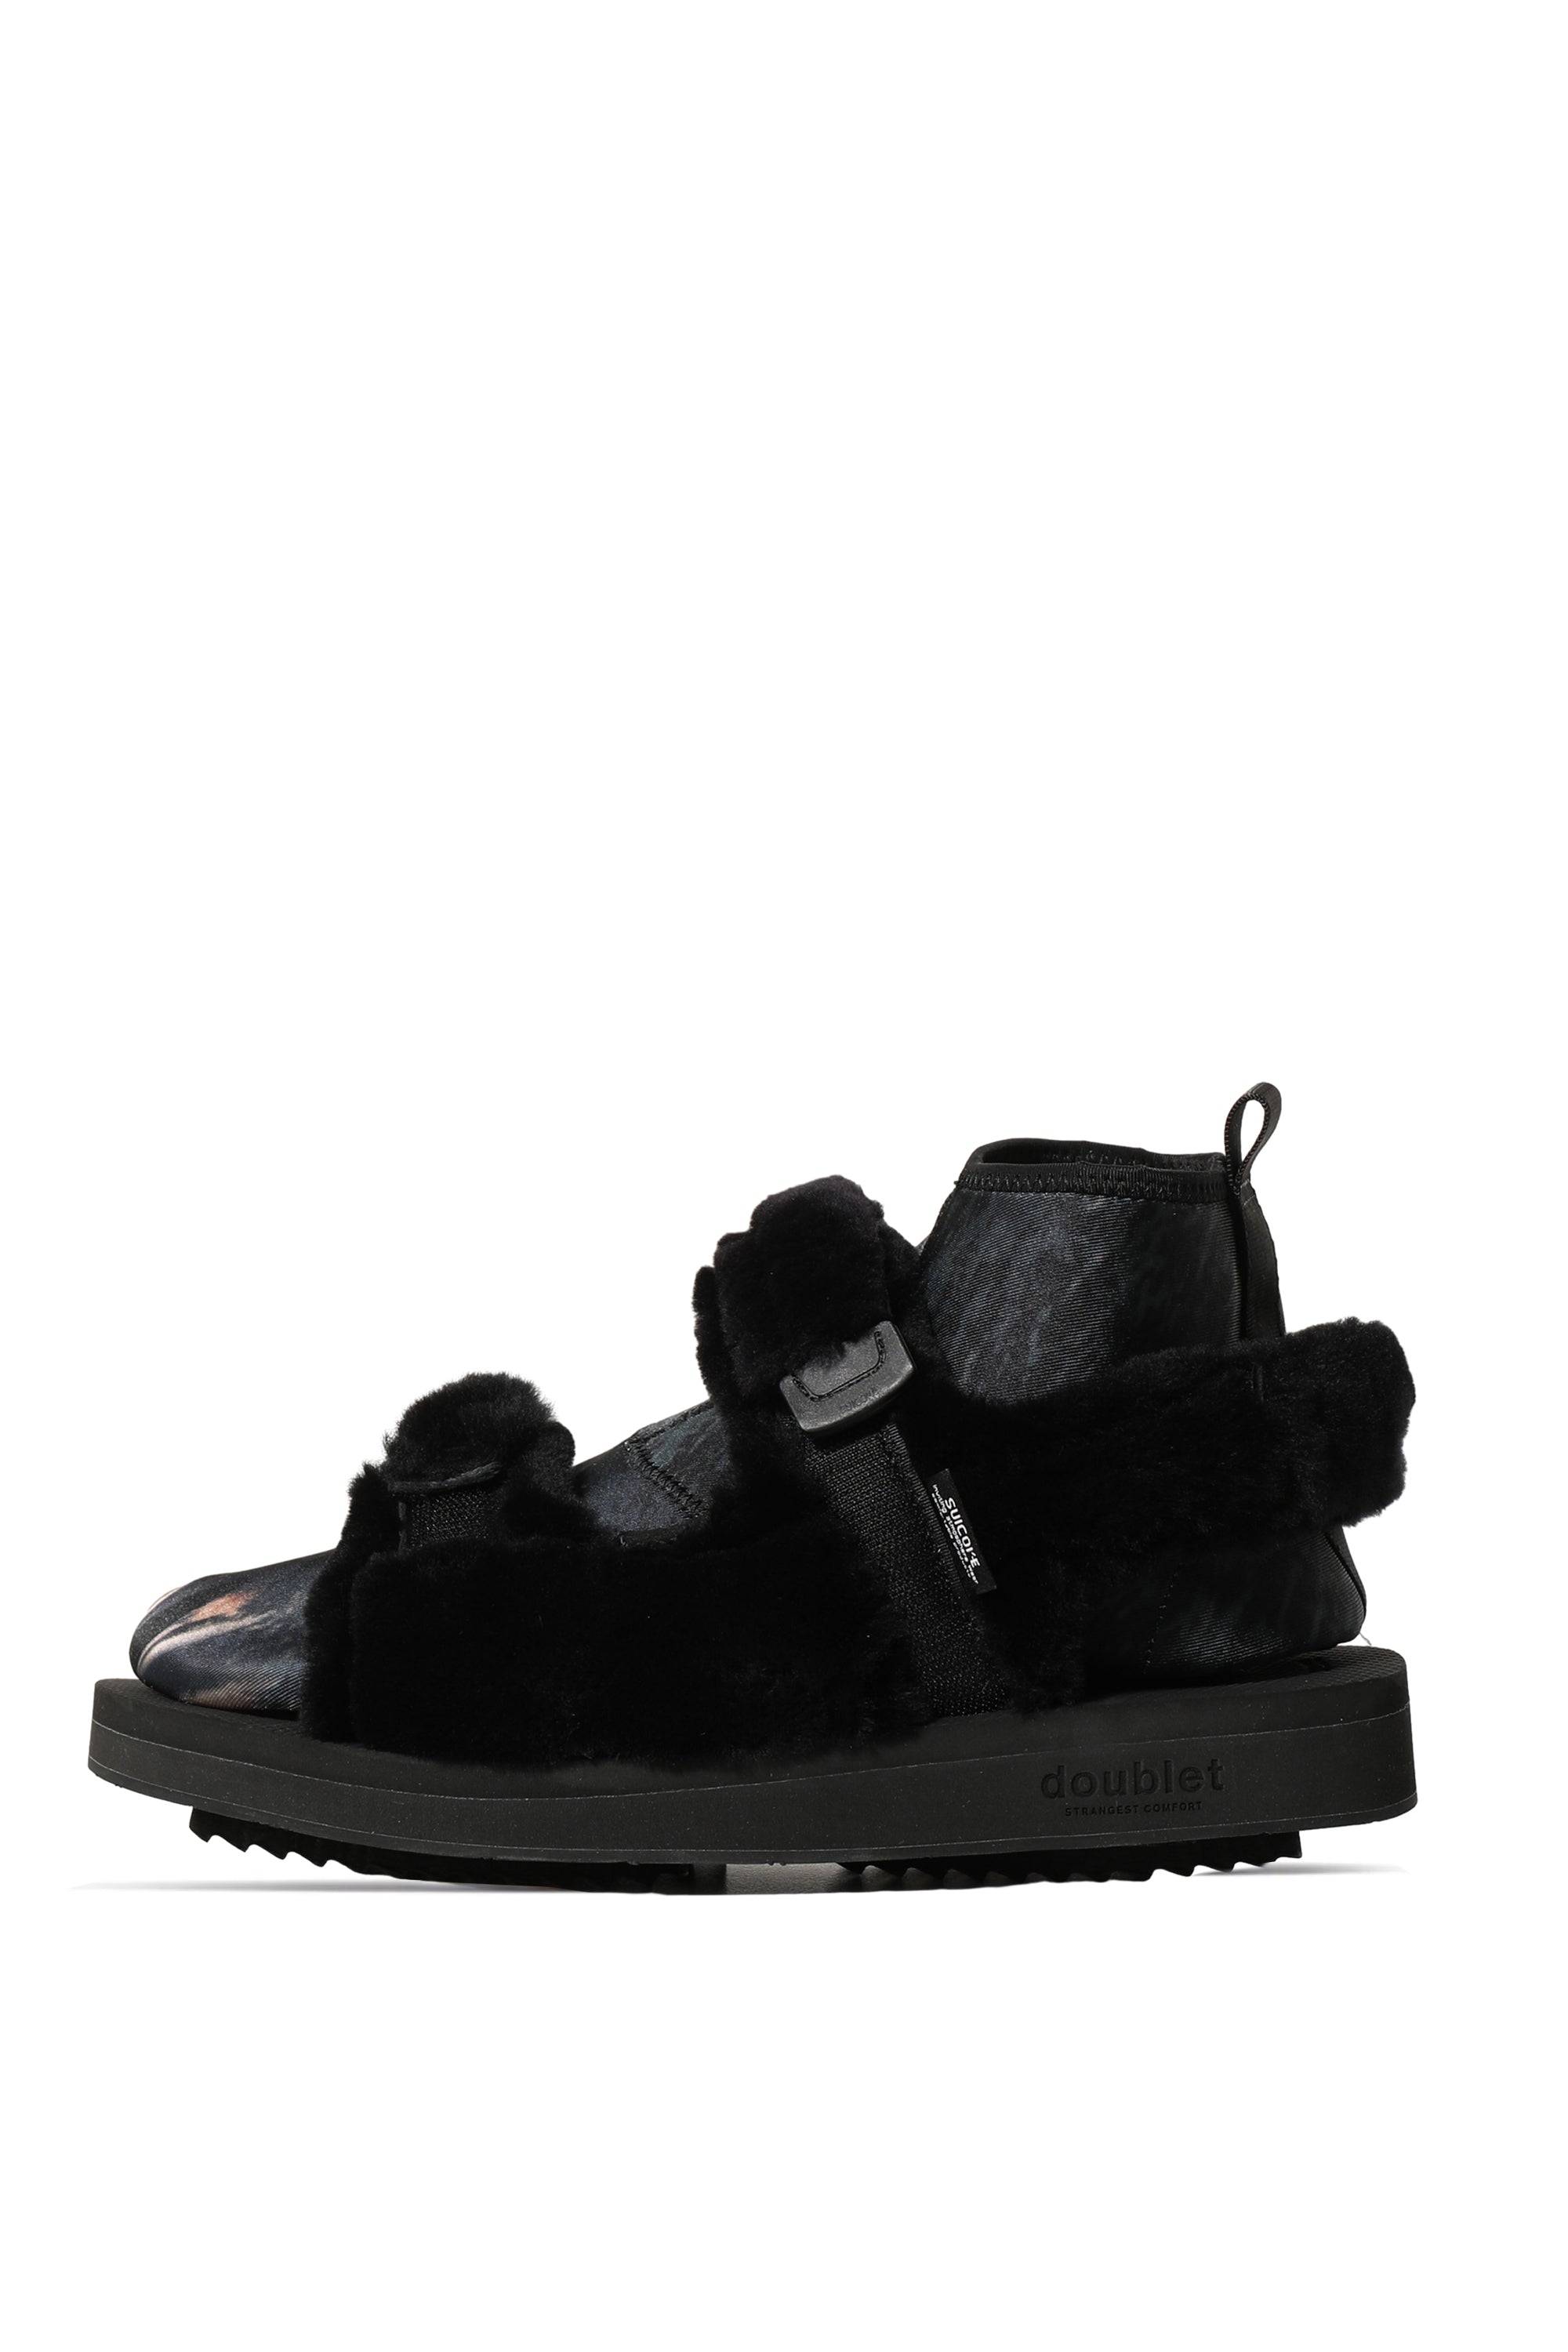 Palm Angels Suicoke Double-strap Slide Sandals in Black for Men